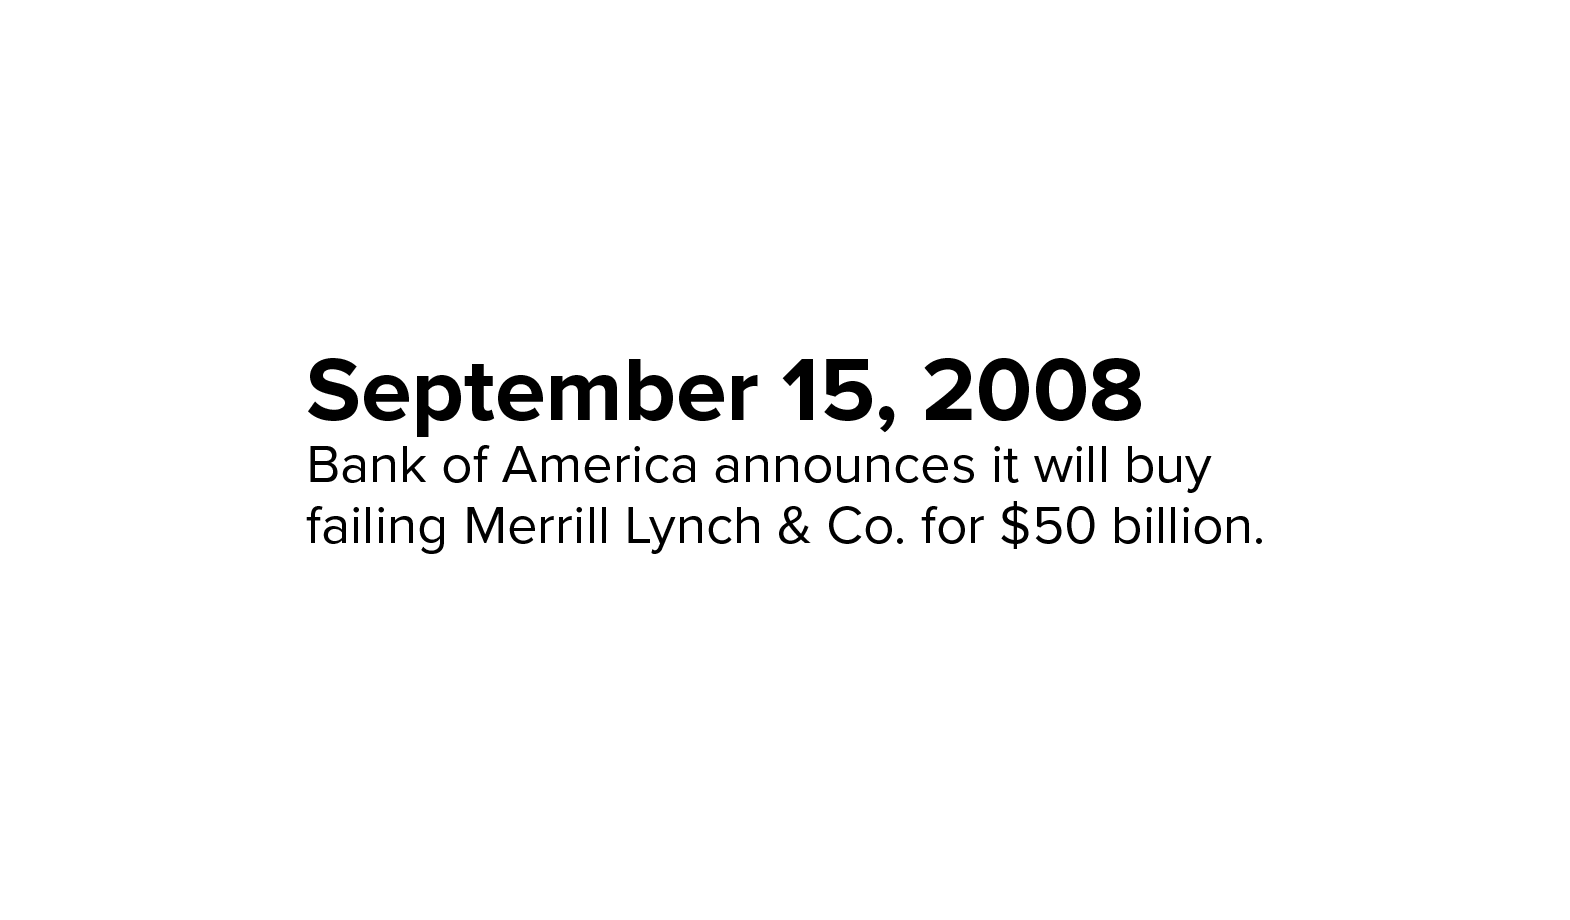 September 15, 2008: Bank of America announces it will buy failing Merrill Lynch & Co. for $50 billion.